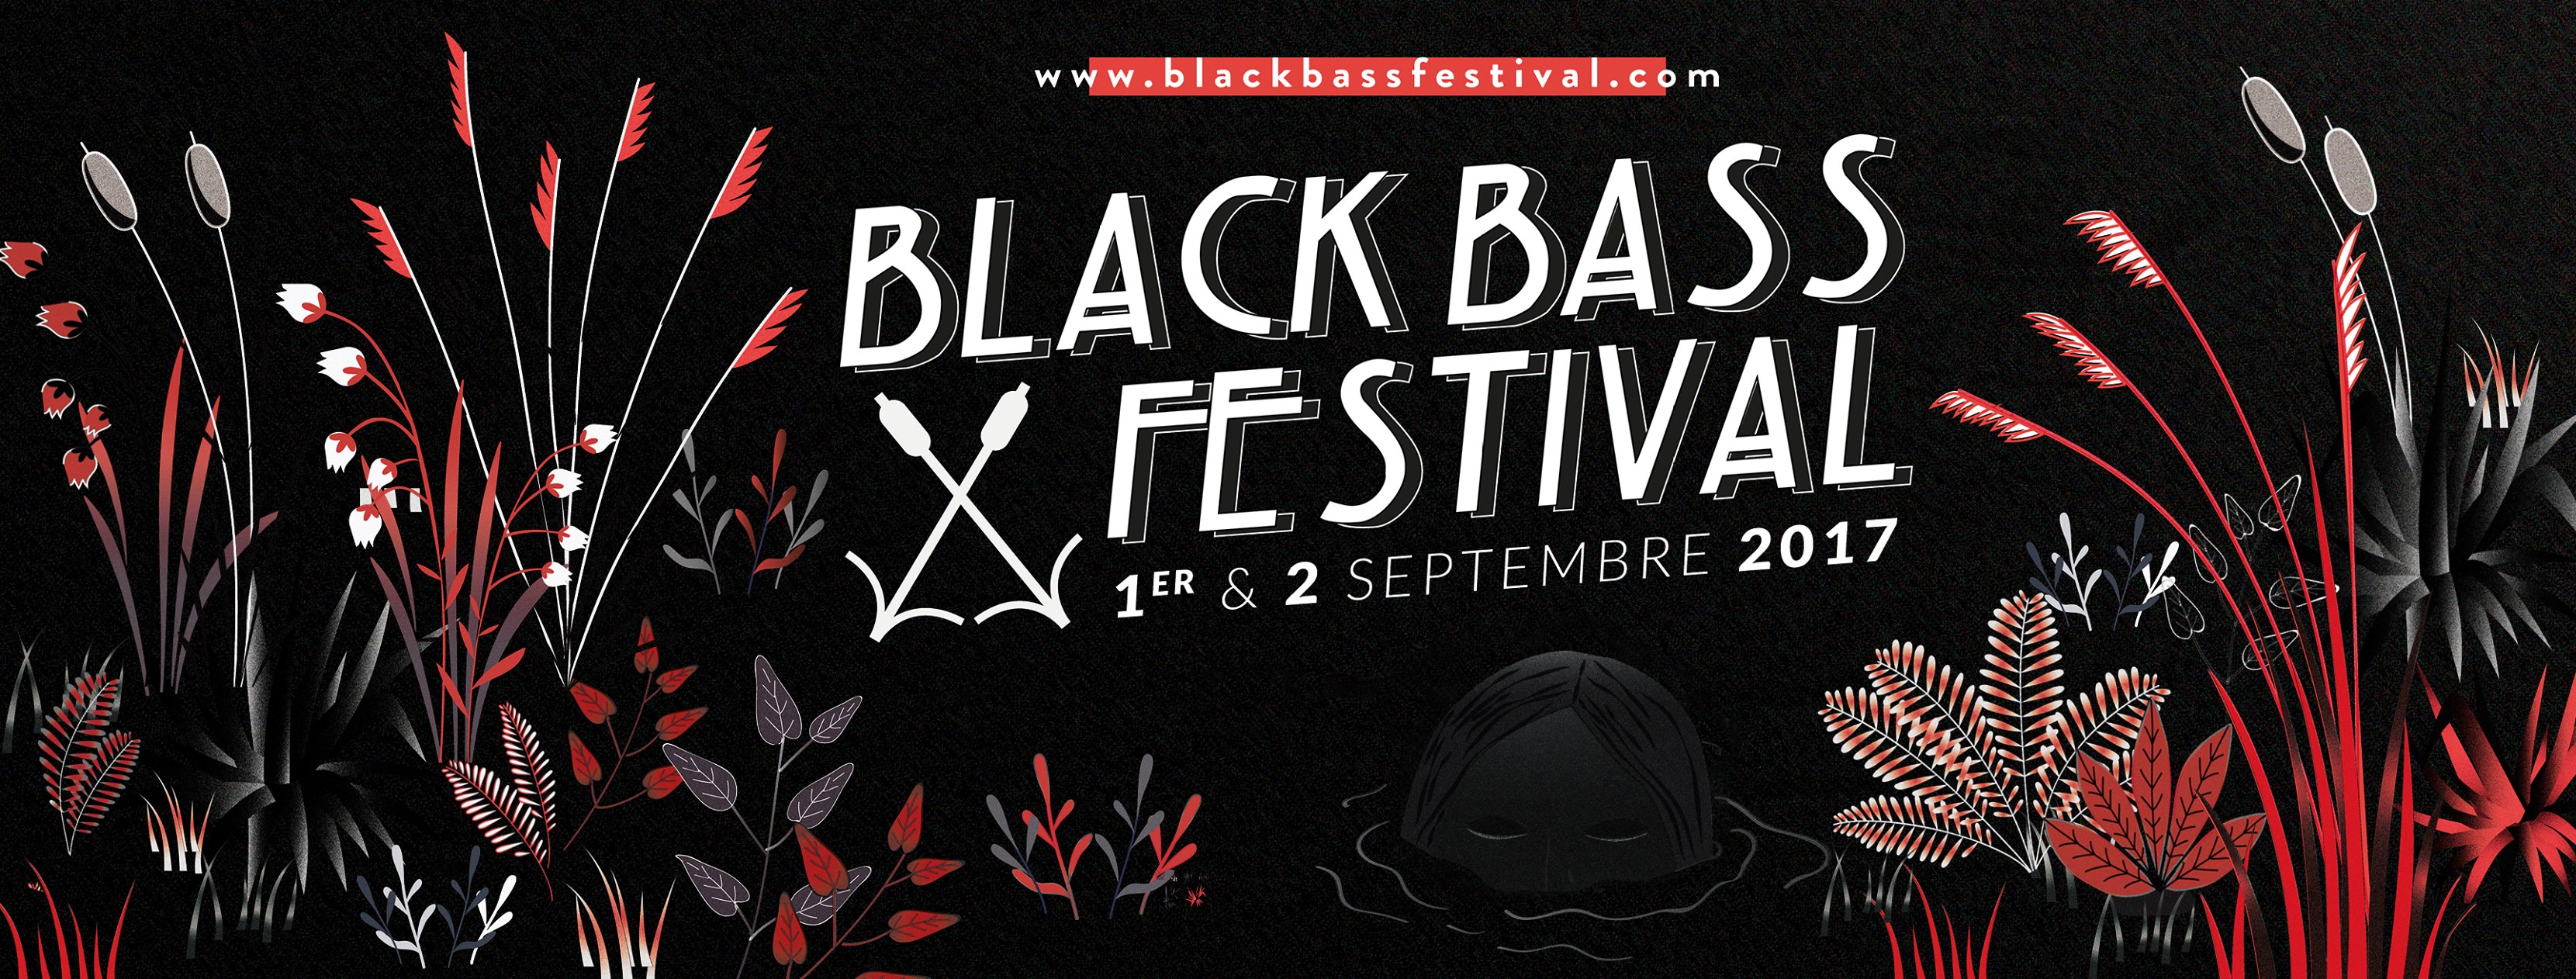 Festival Black Bass, gironde, rock